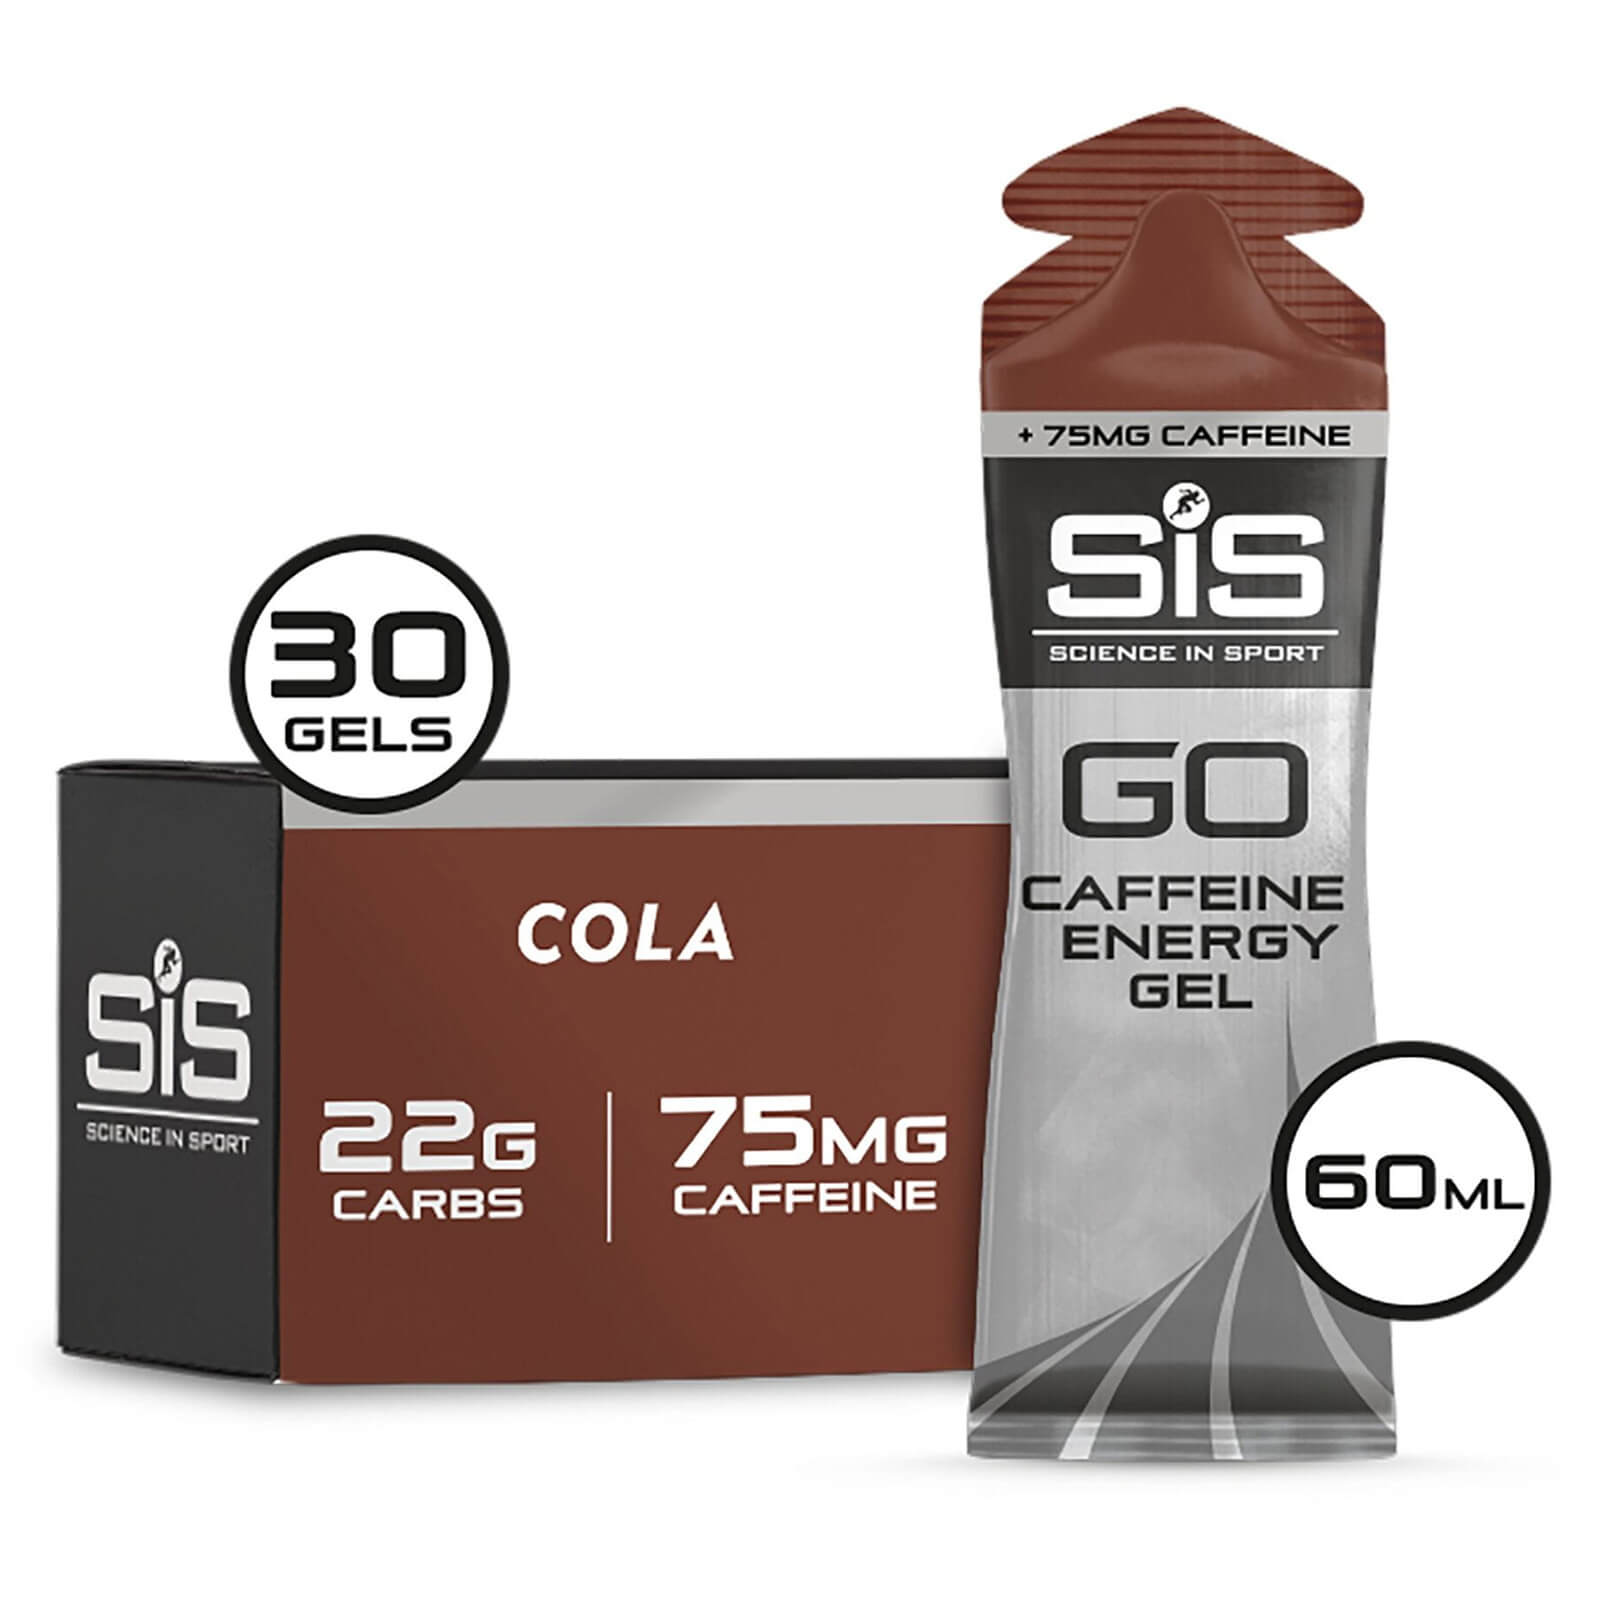 Science in Sport GO Energy + Caffeine Gel Box of 30 - Cola